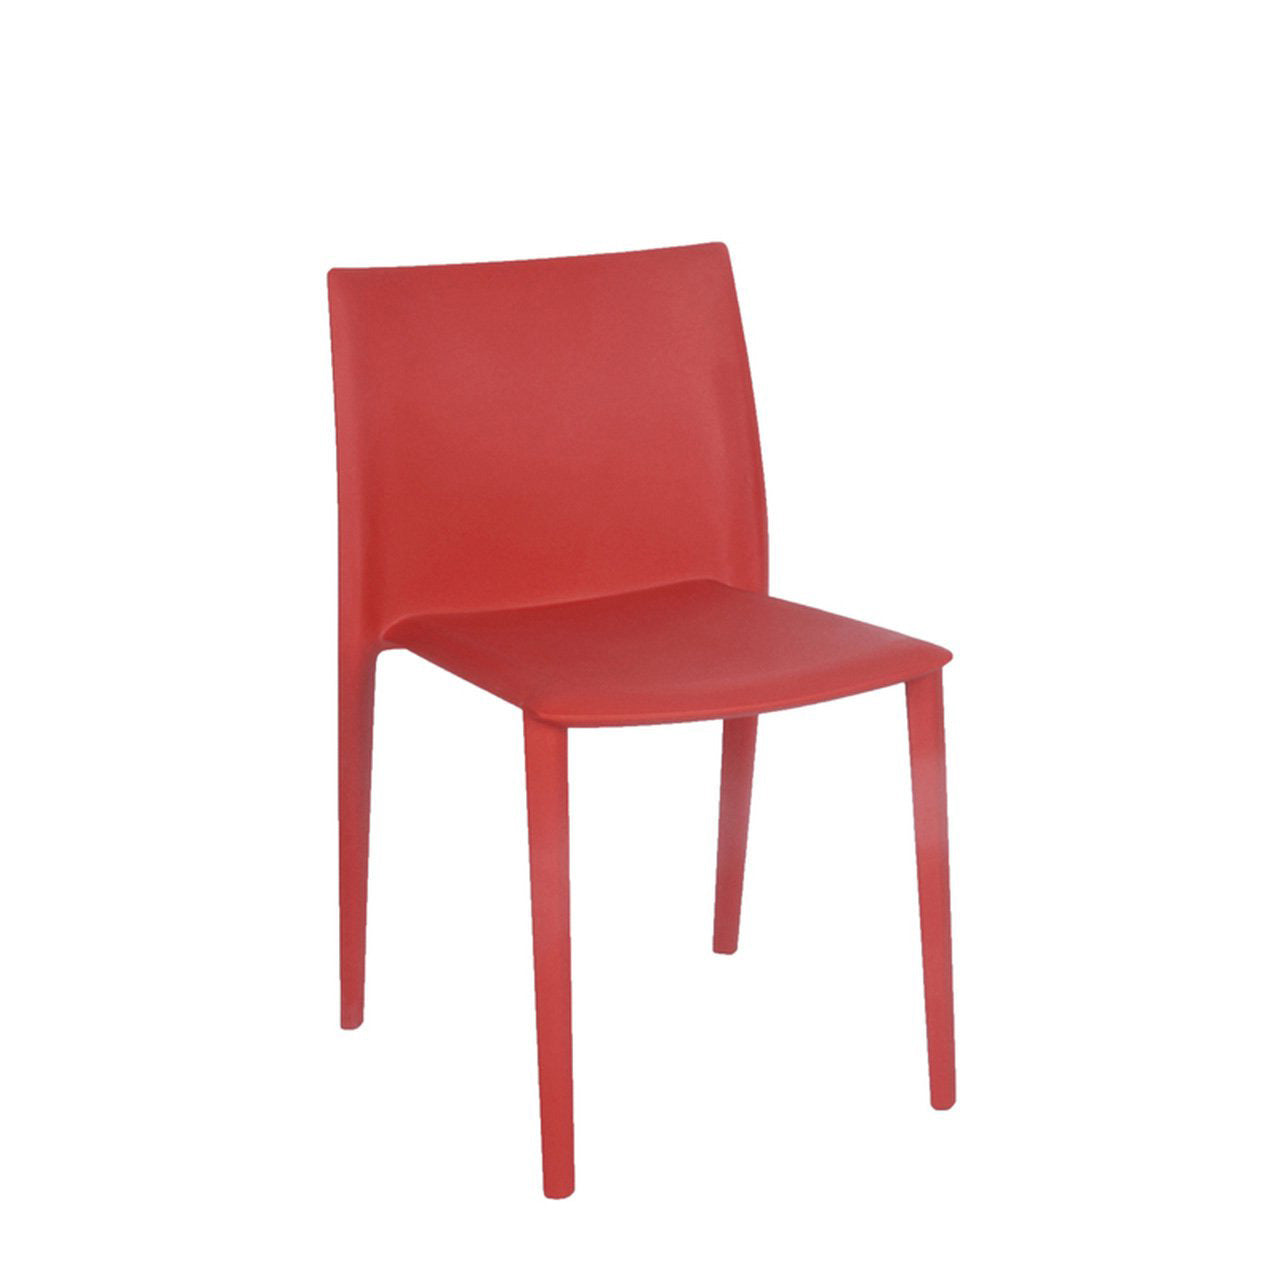 Sponge Chair - ContractWorld Furniture